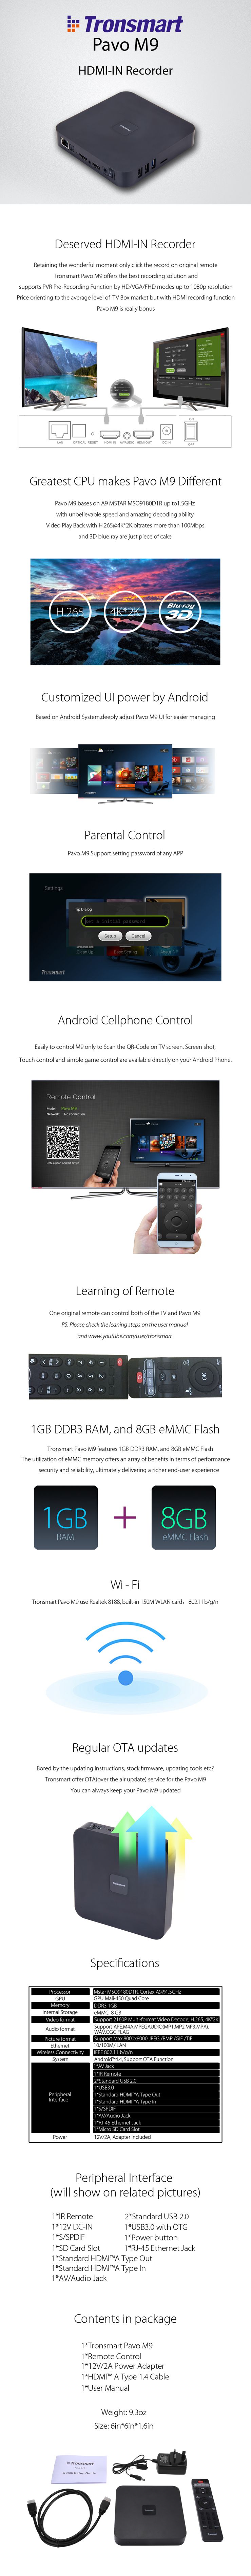 Tronsmart Pavo M9 4K TV BOX HDMI in Recorder Android 4.4.2 Mstar MSO9180D1R 1GB/8G 802.11 b/g/n LAN H.265 USB3.0 HDMI